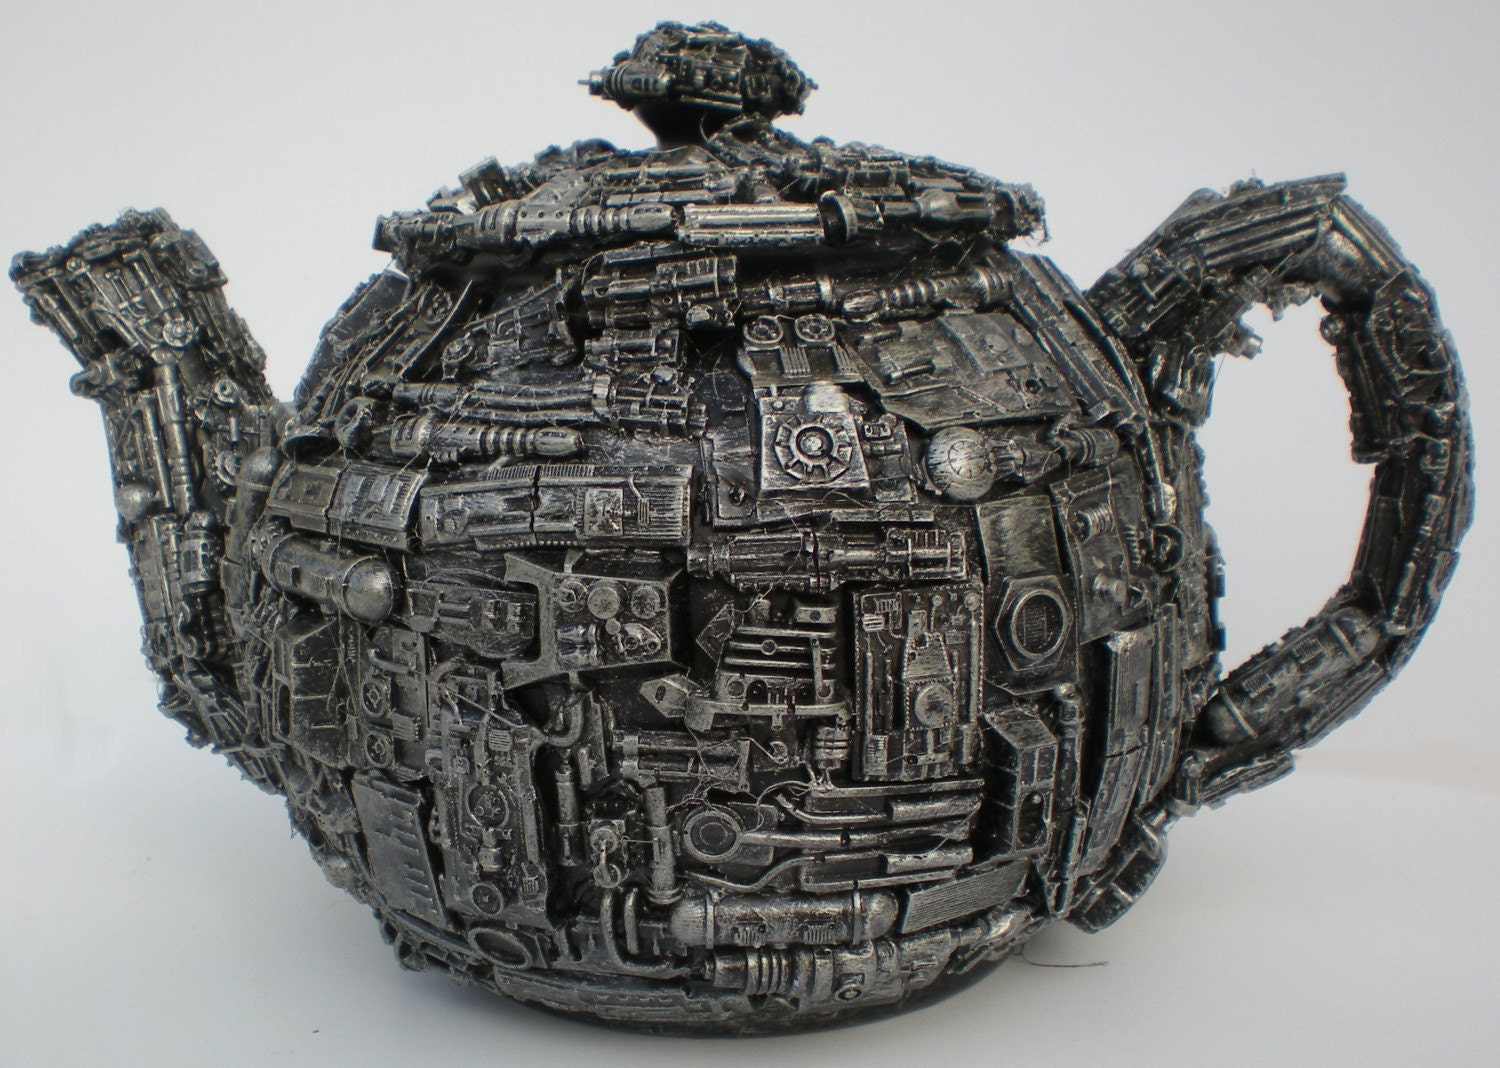 Robotic teapot